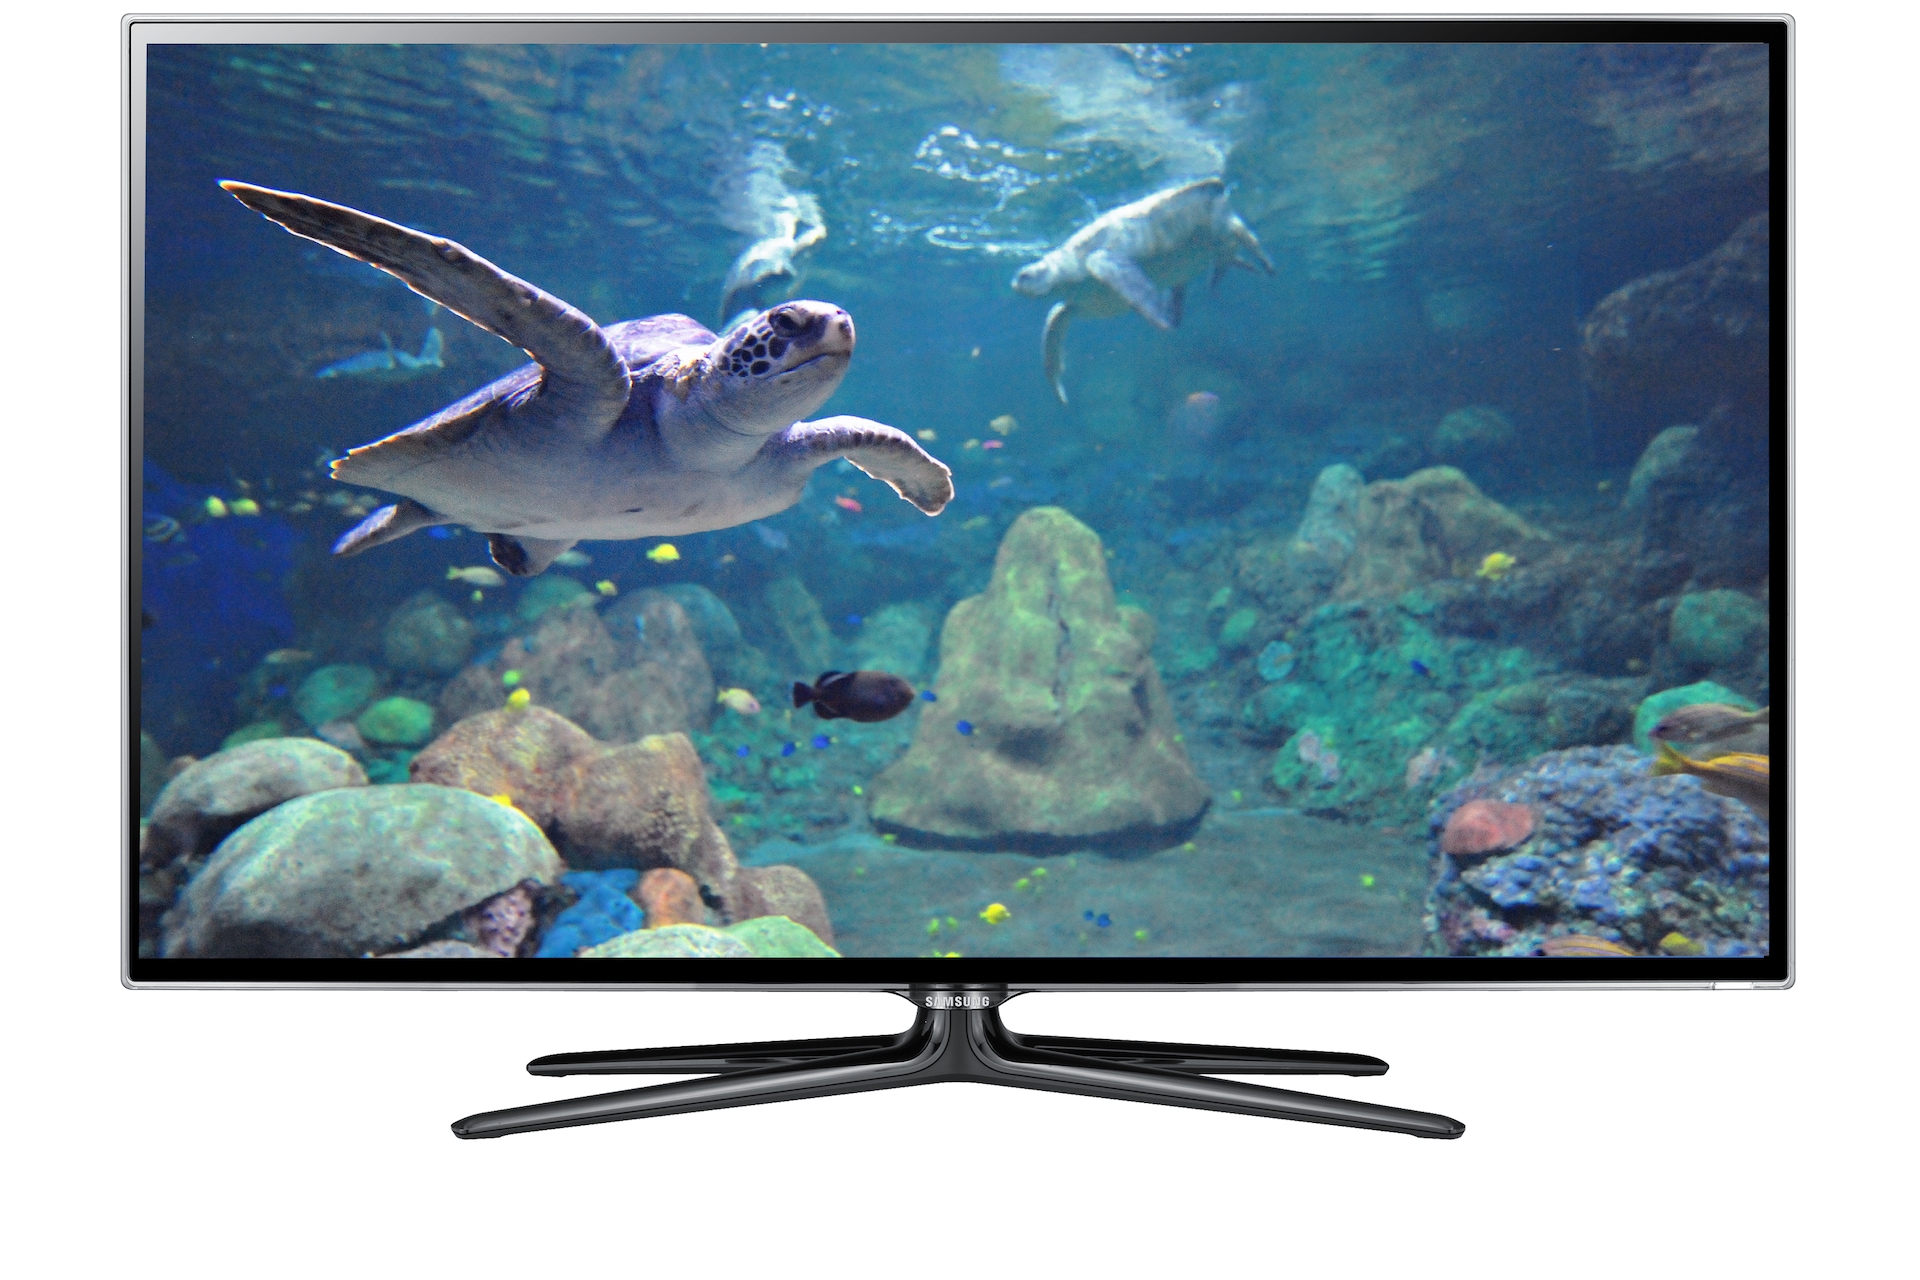 [2012] UA46ES6200R Smart 46-Inch Full HD LED TV - Samsung UAE3000 x 2000